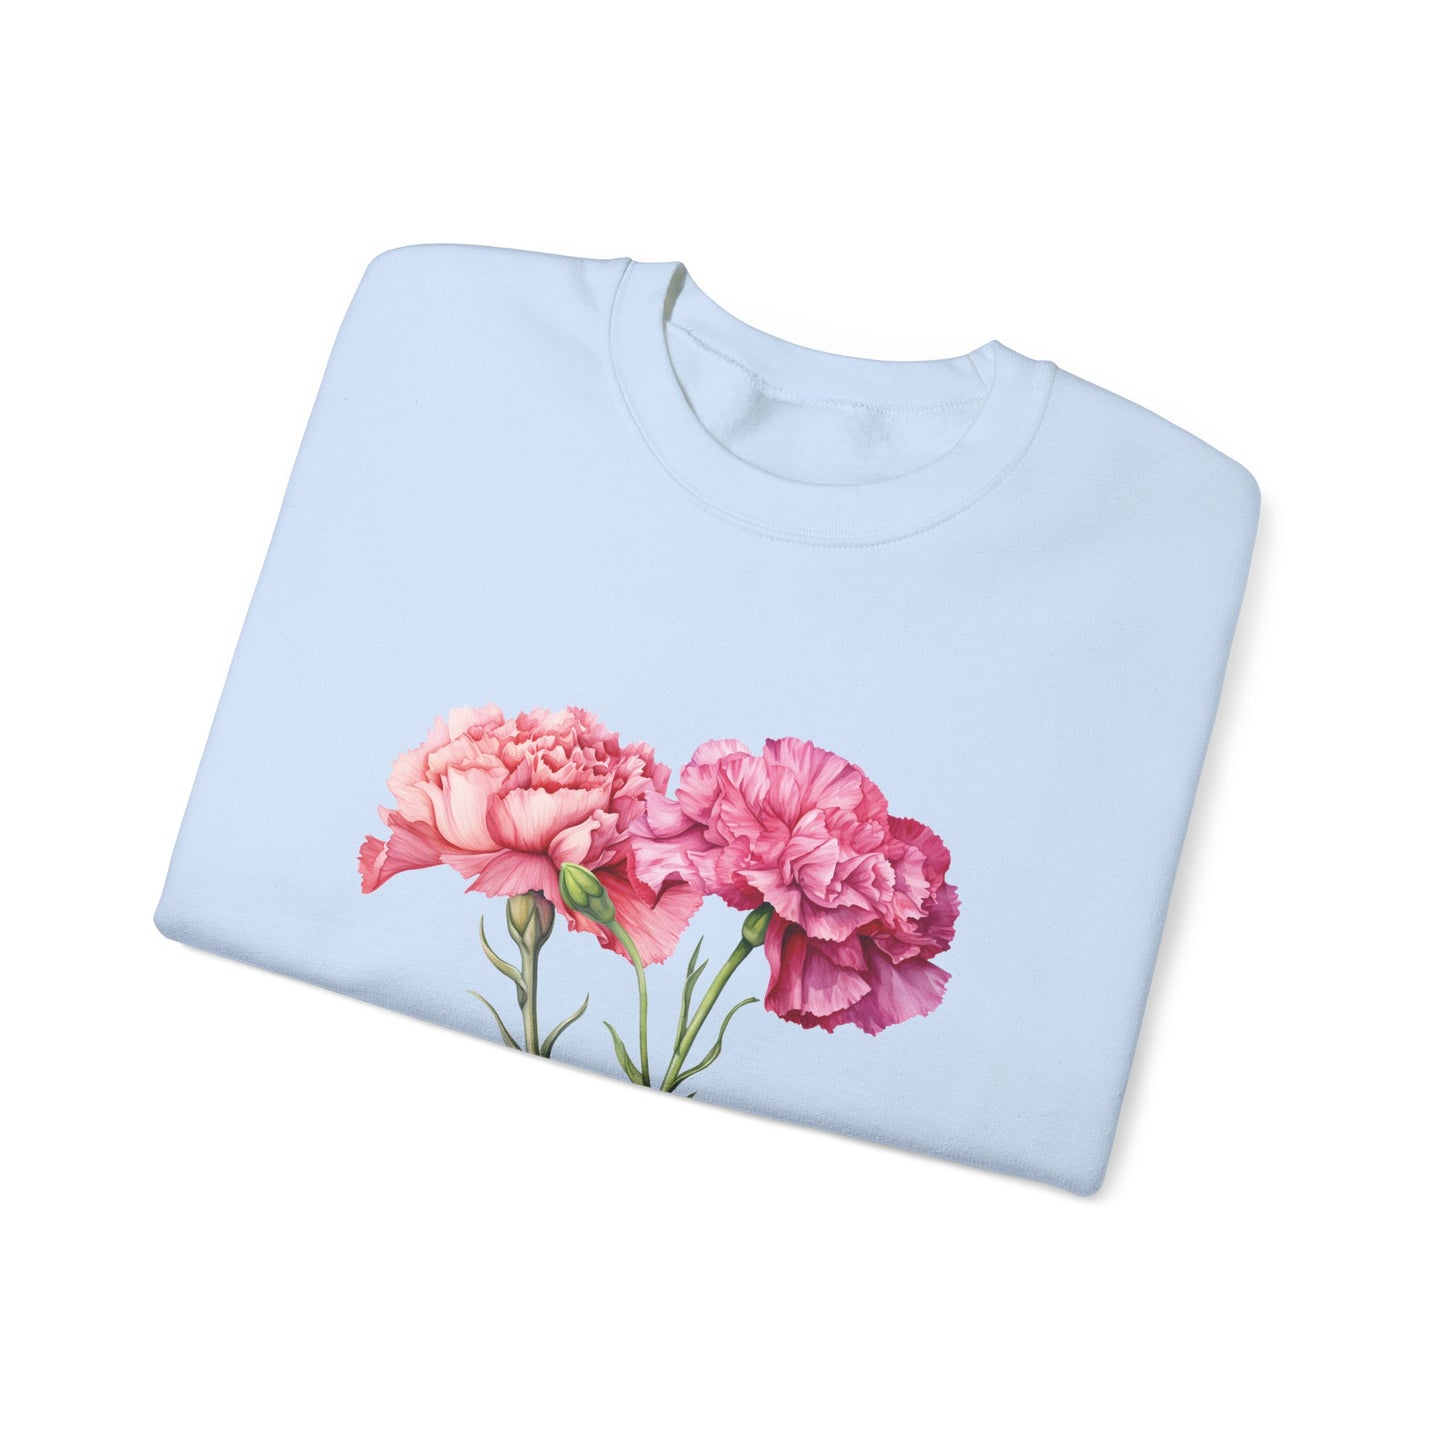 January Birth Flower (Carnation) - Unisex Heavy Blend™ Crewneck Sweatshirt